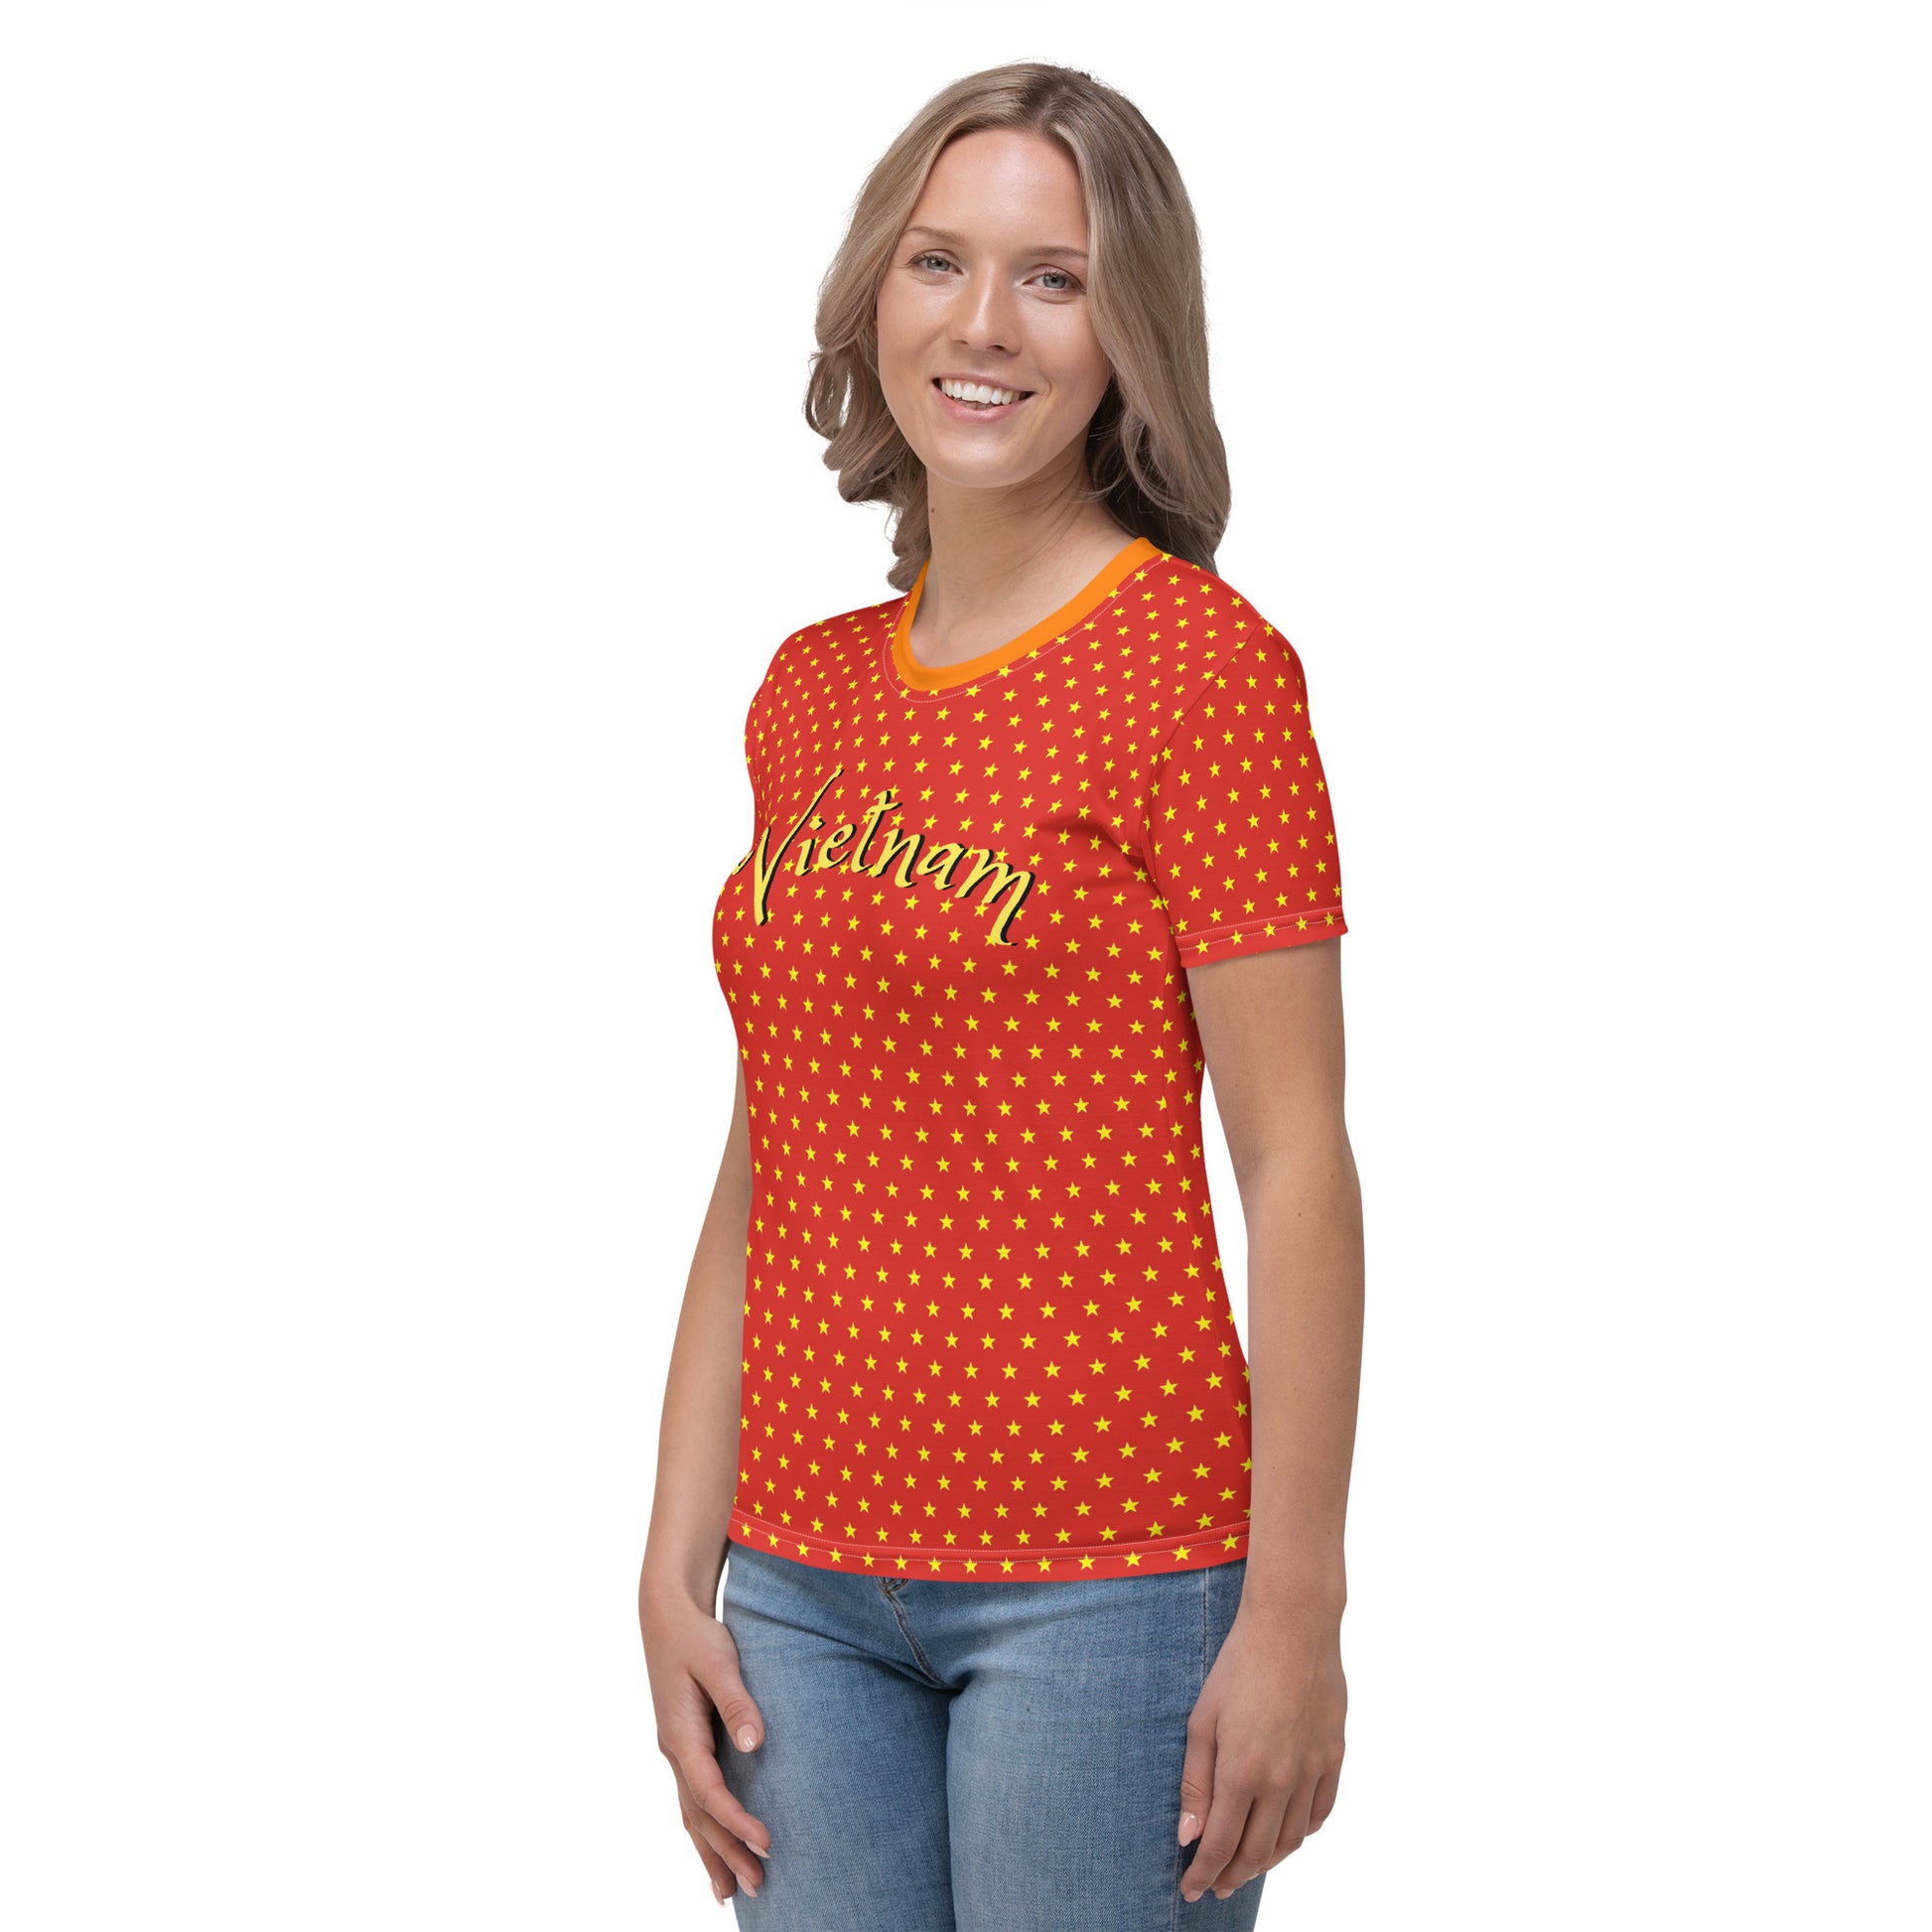 Comfortable Women's T-Shirt: Vietnam Graphic with Yellow Polka Dots 